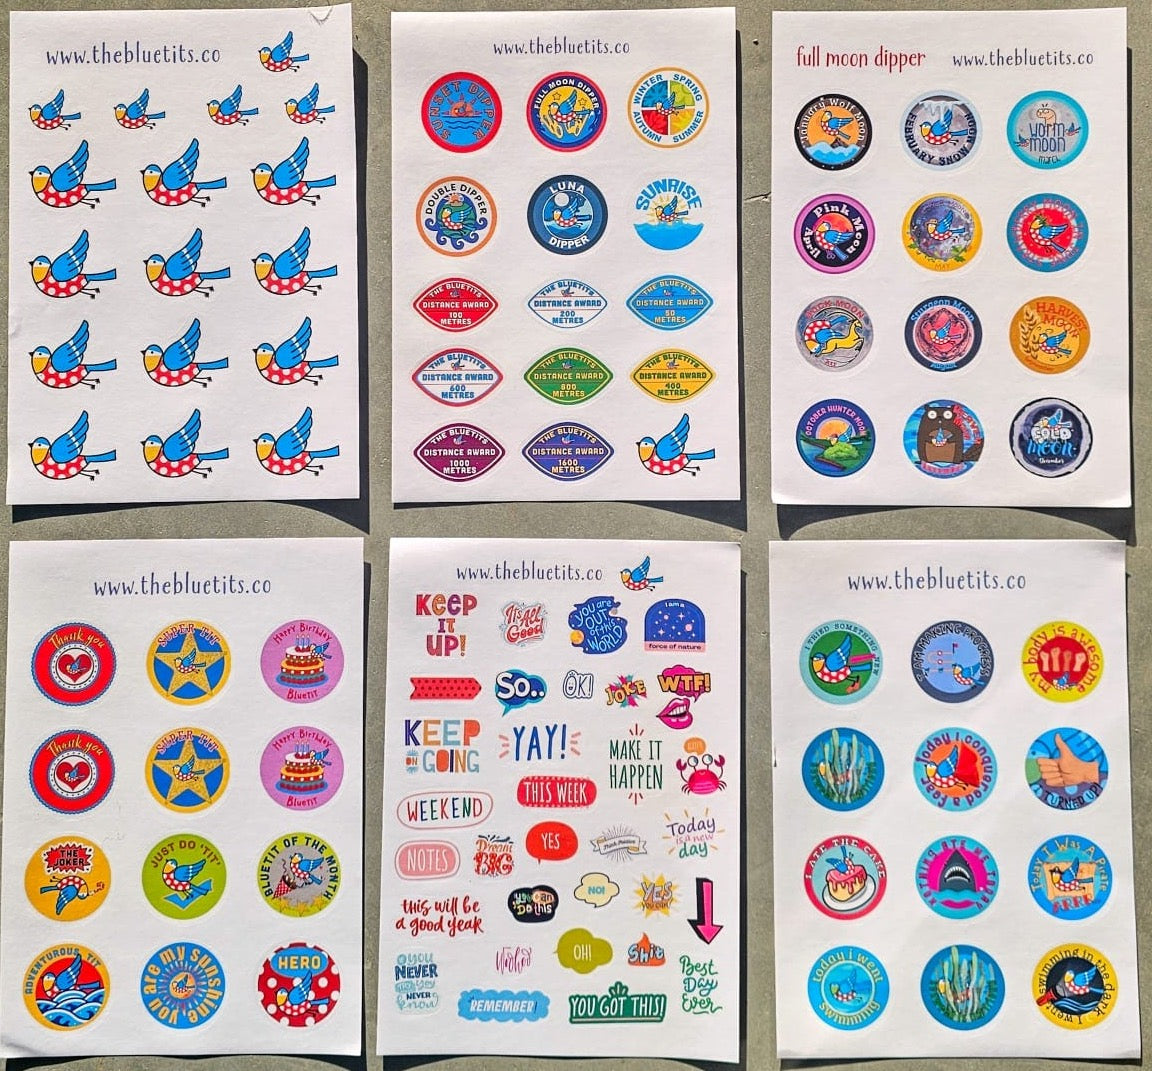 Bluetit Sticker Pack (100 stickers)